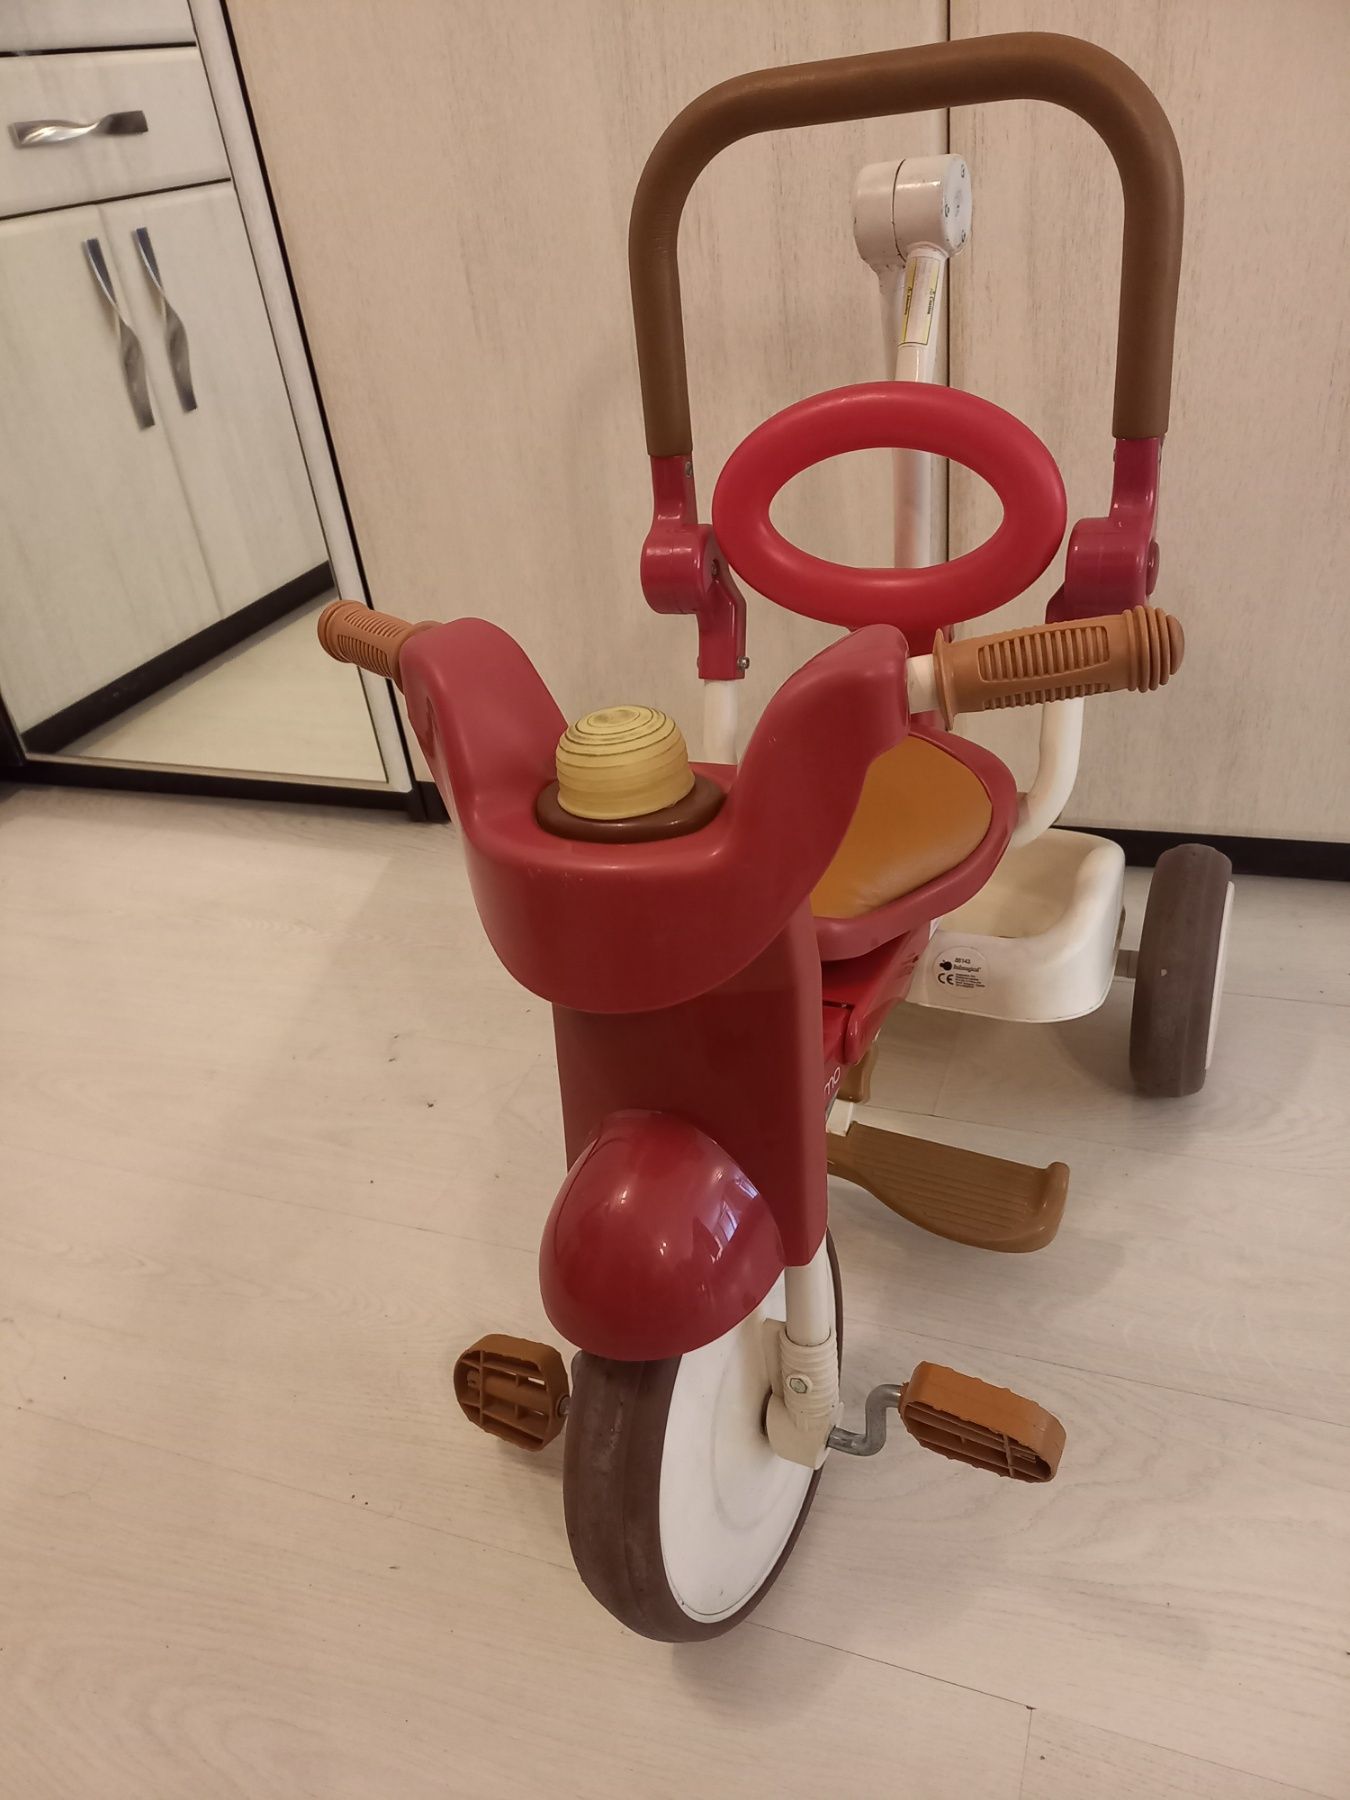 Сгъваемо детско колело с родителски контрол "Imaginarium"